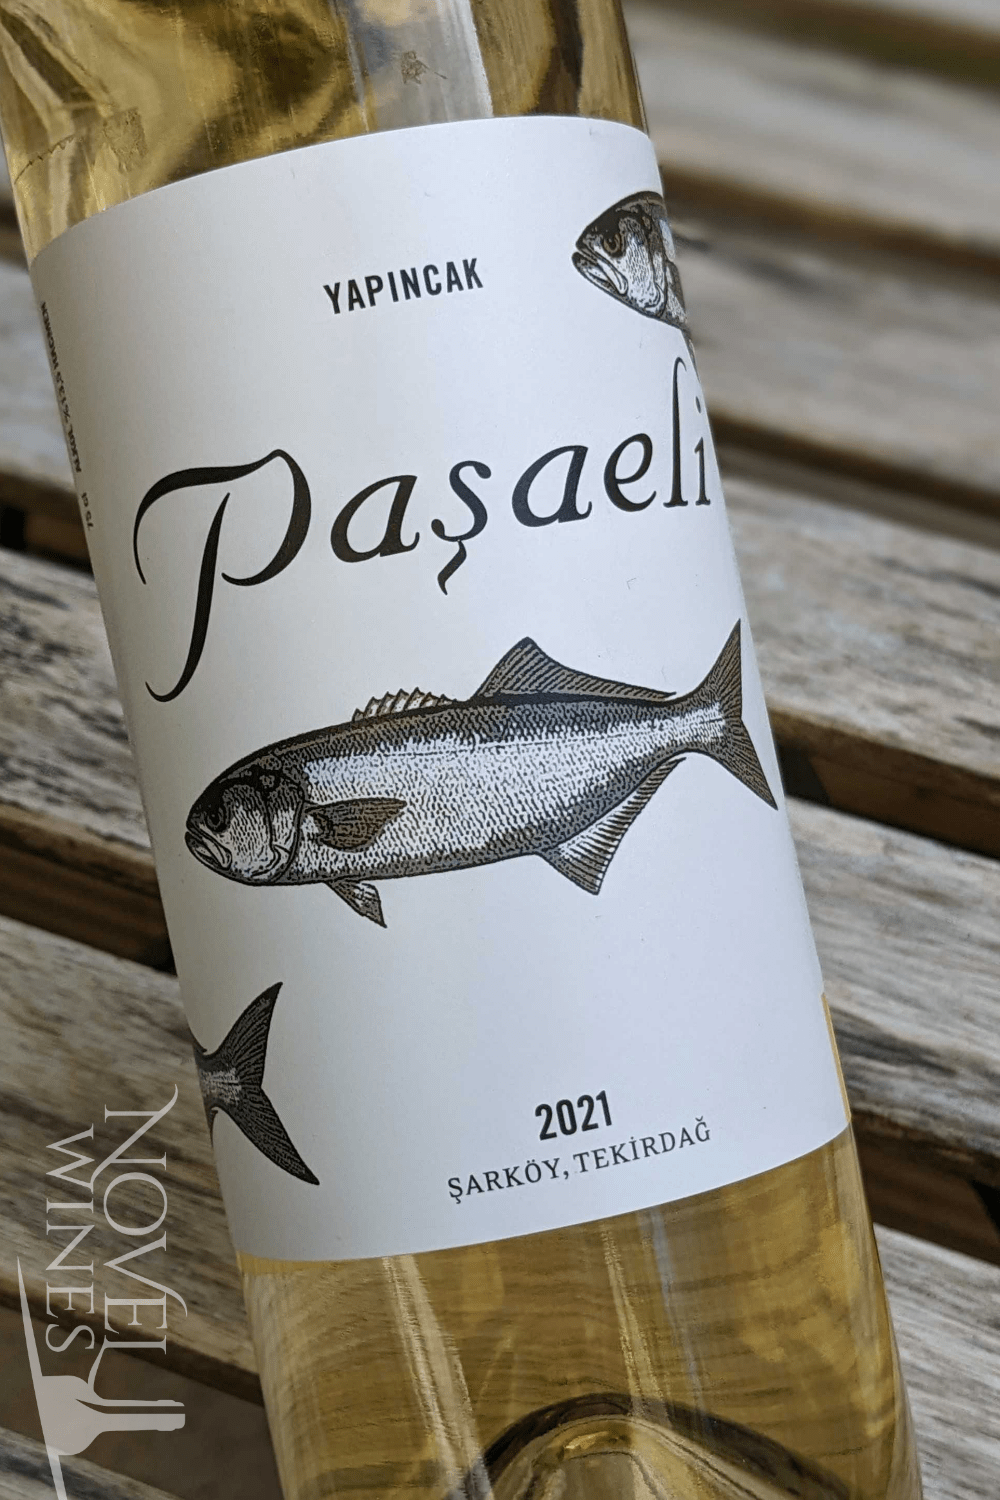 Novel Wines White Wine Pasaeli Şarköy Yapincak Limited Edition 2021, Turkey